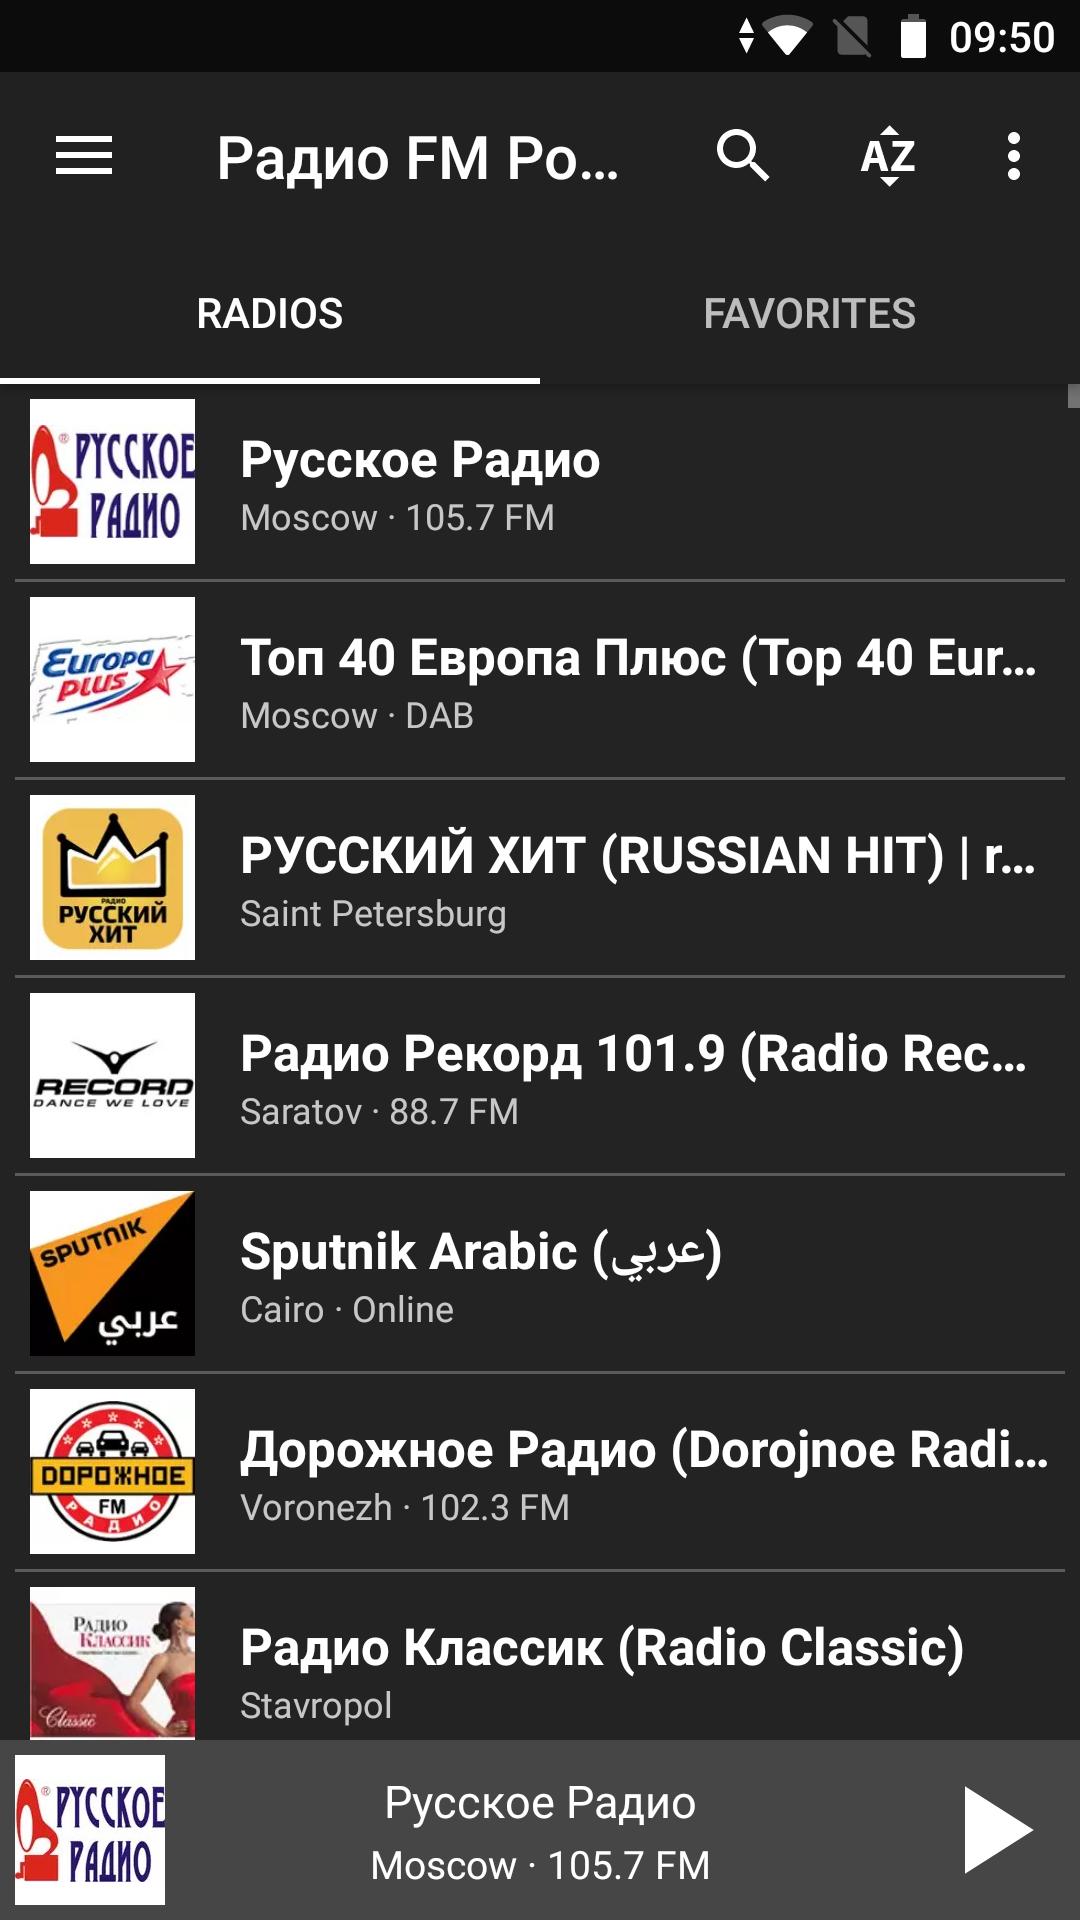 Рашен фм радио. Радио fm. Радиостанции России. Радио России fm. Приложение радио.